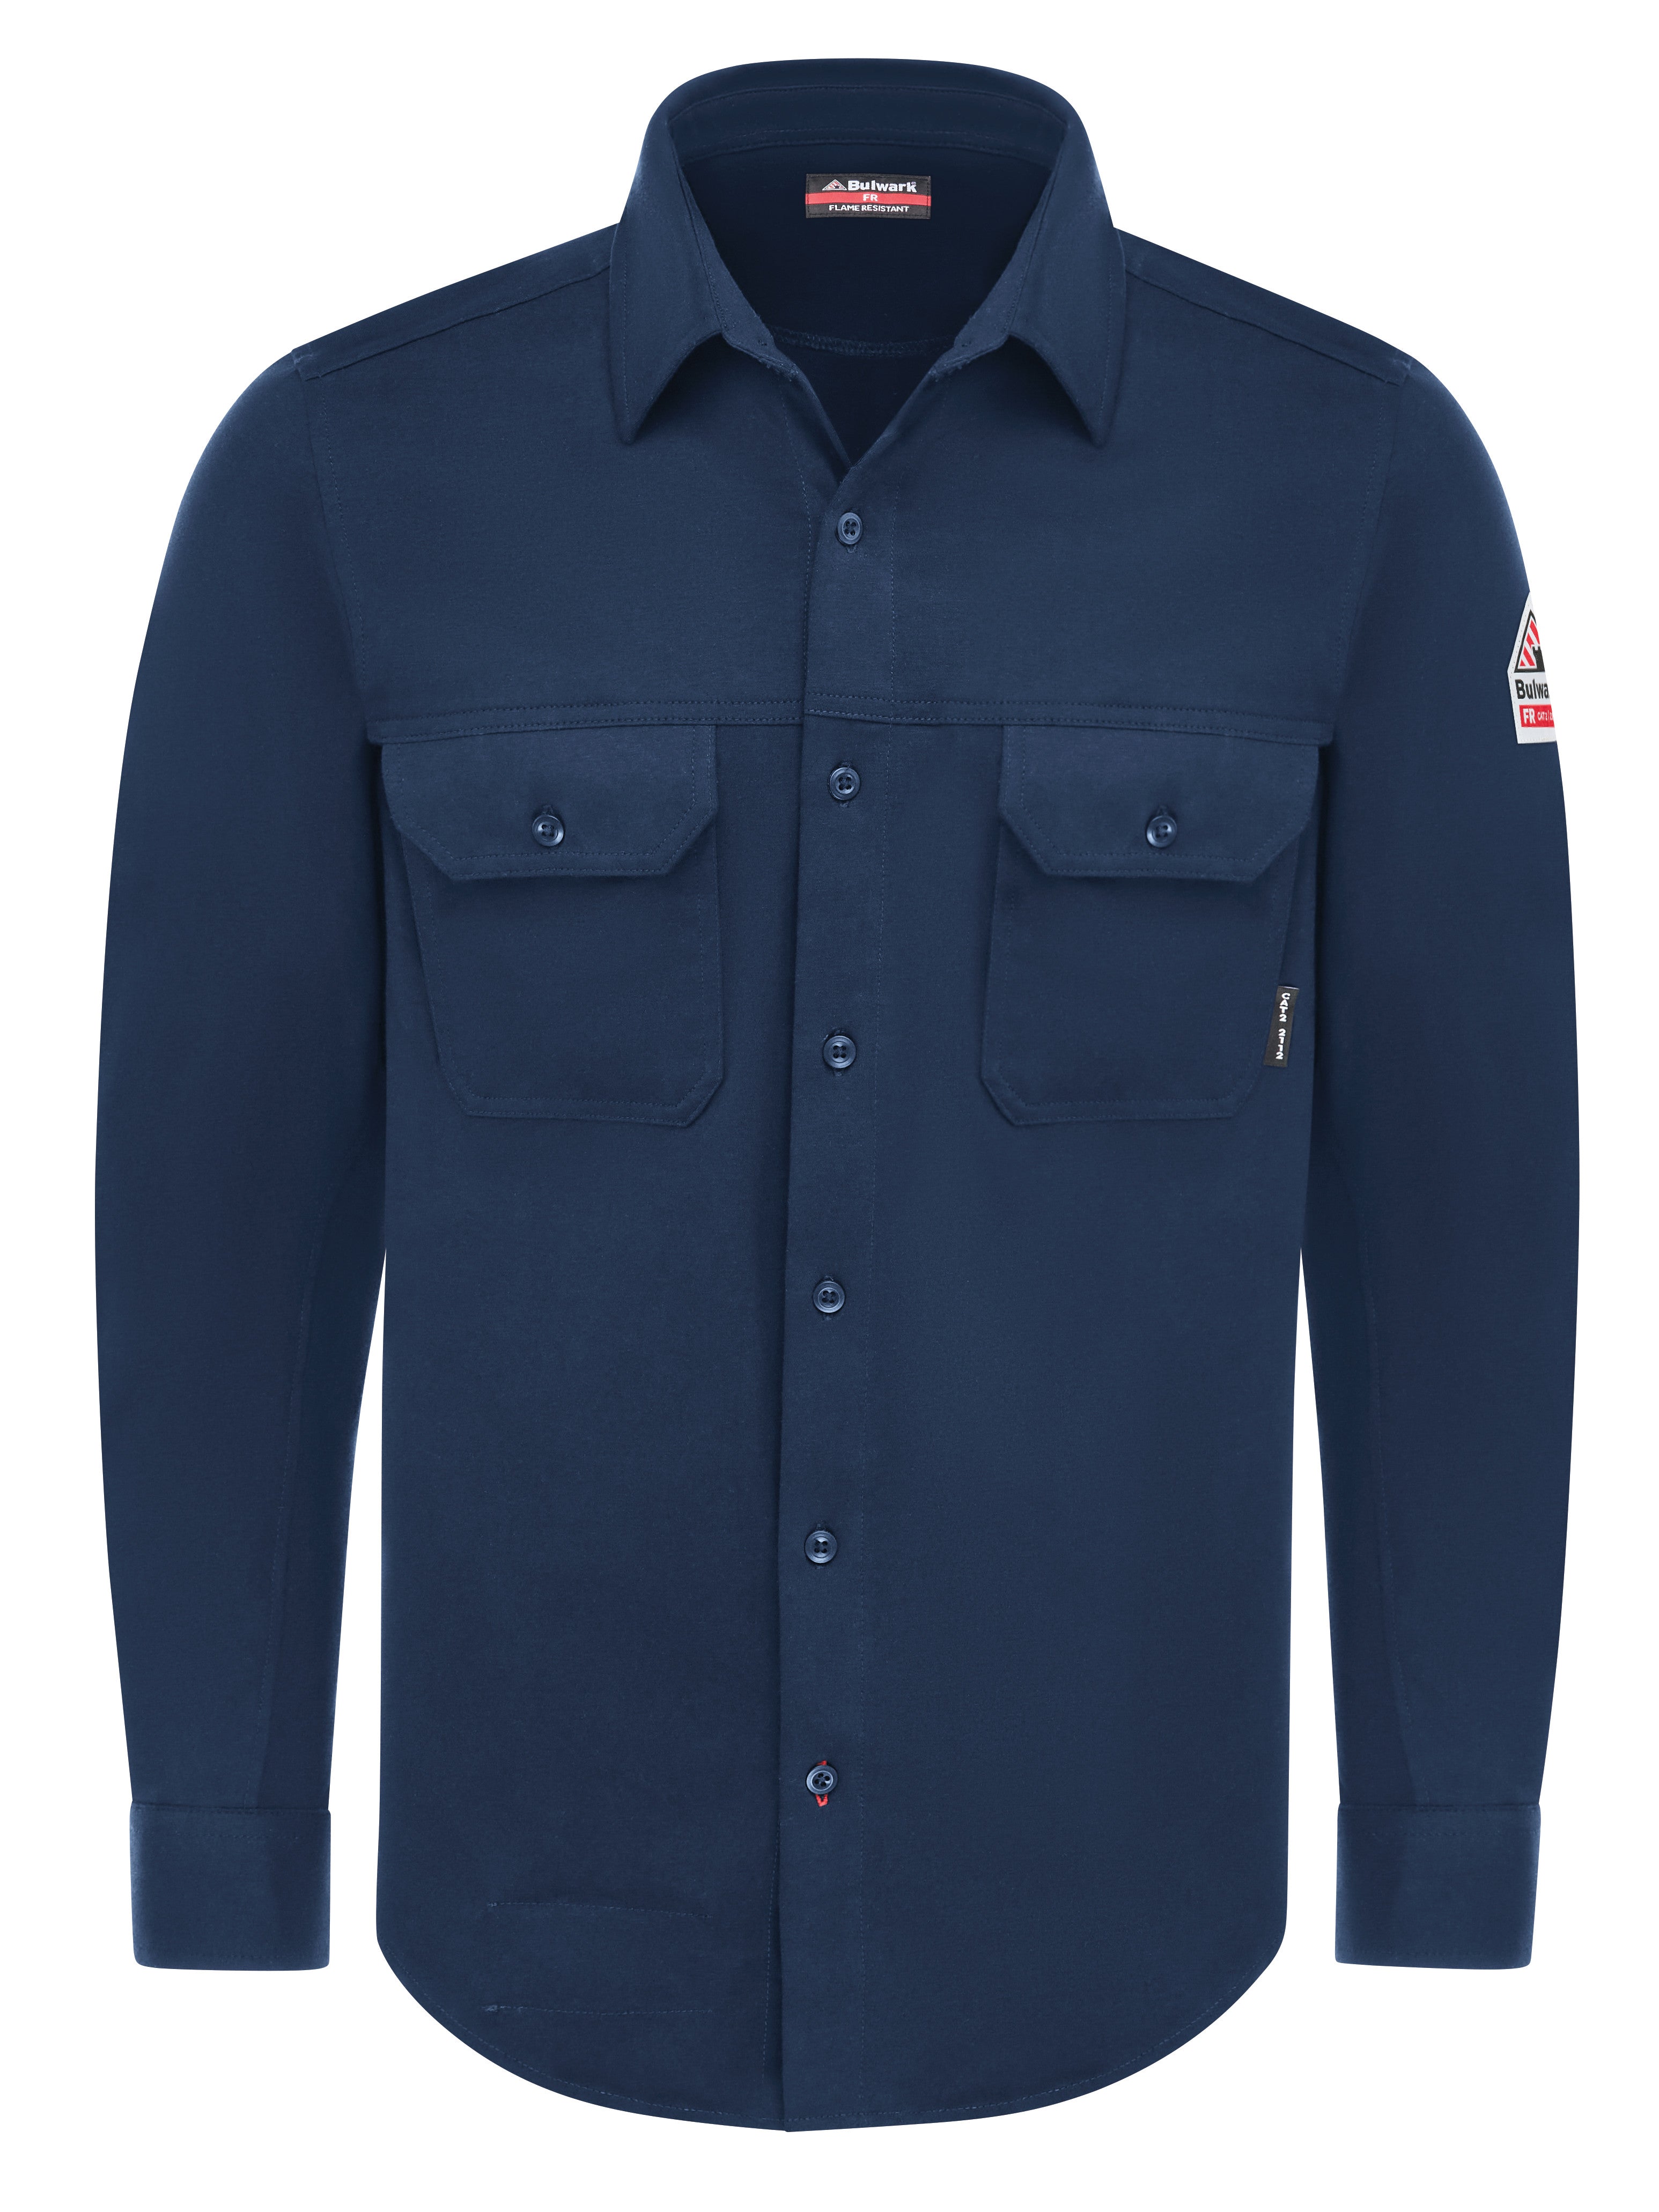 Bulwark FR Flex Knit Button Down Shirt STG4 - Navy-eSafety Supplies, Inc